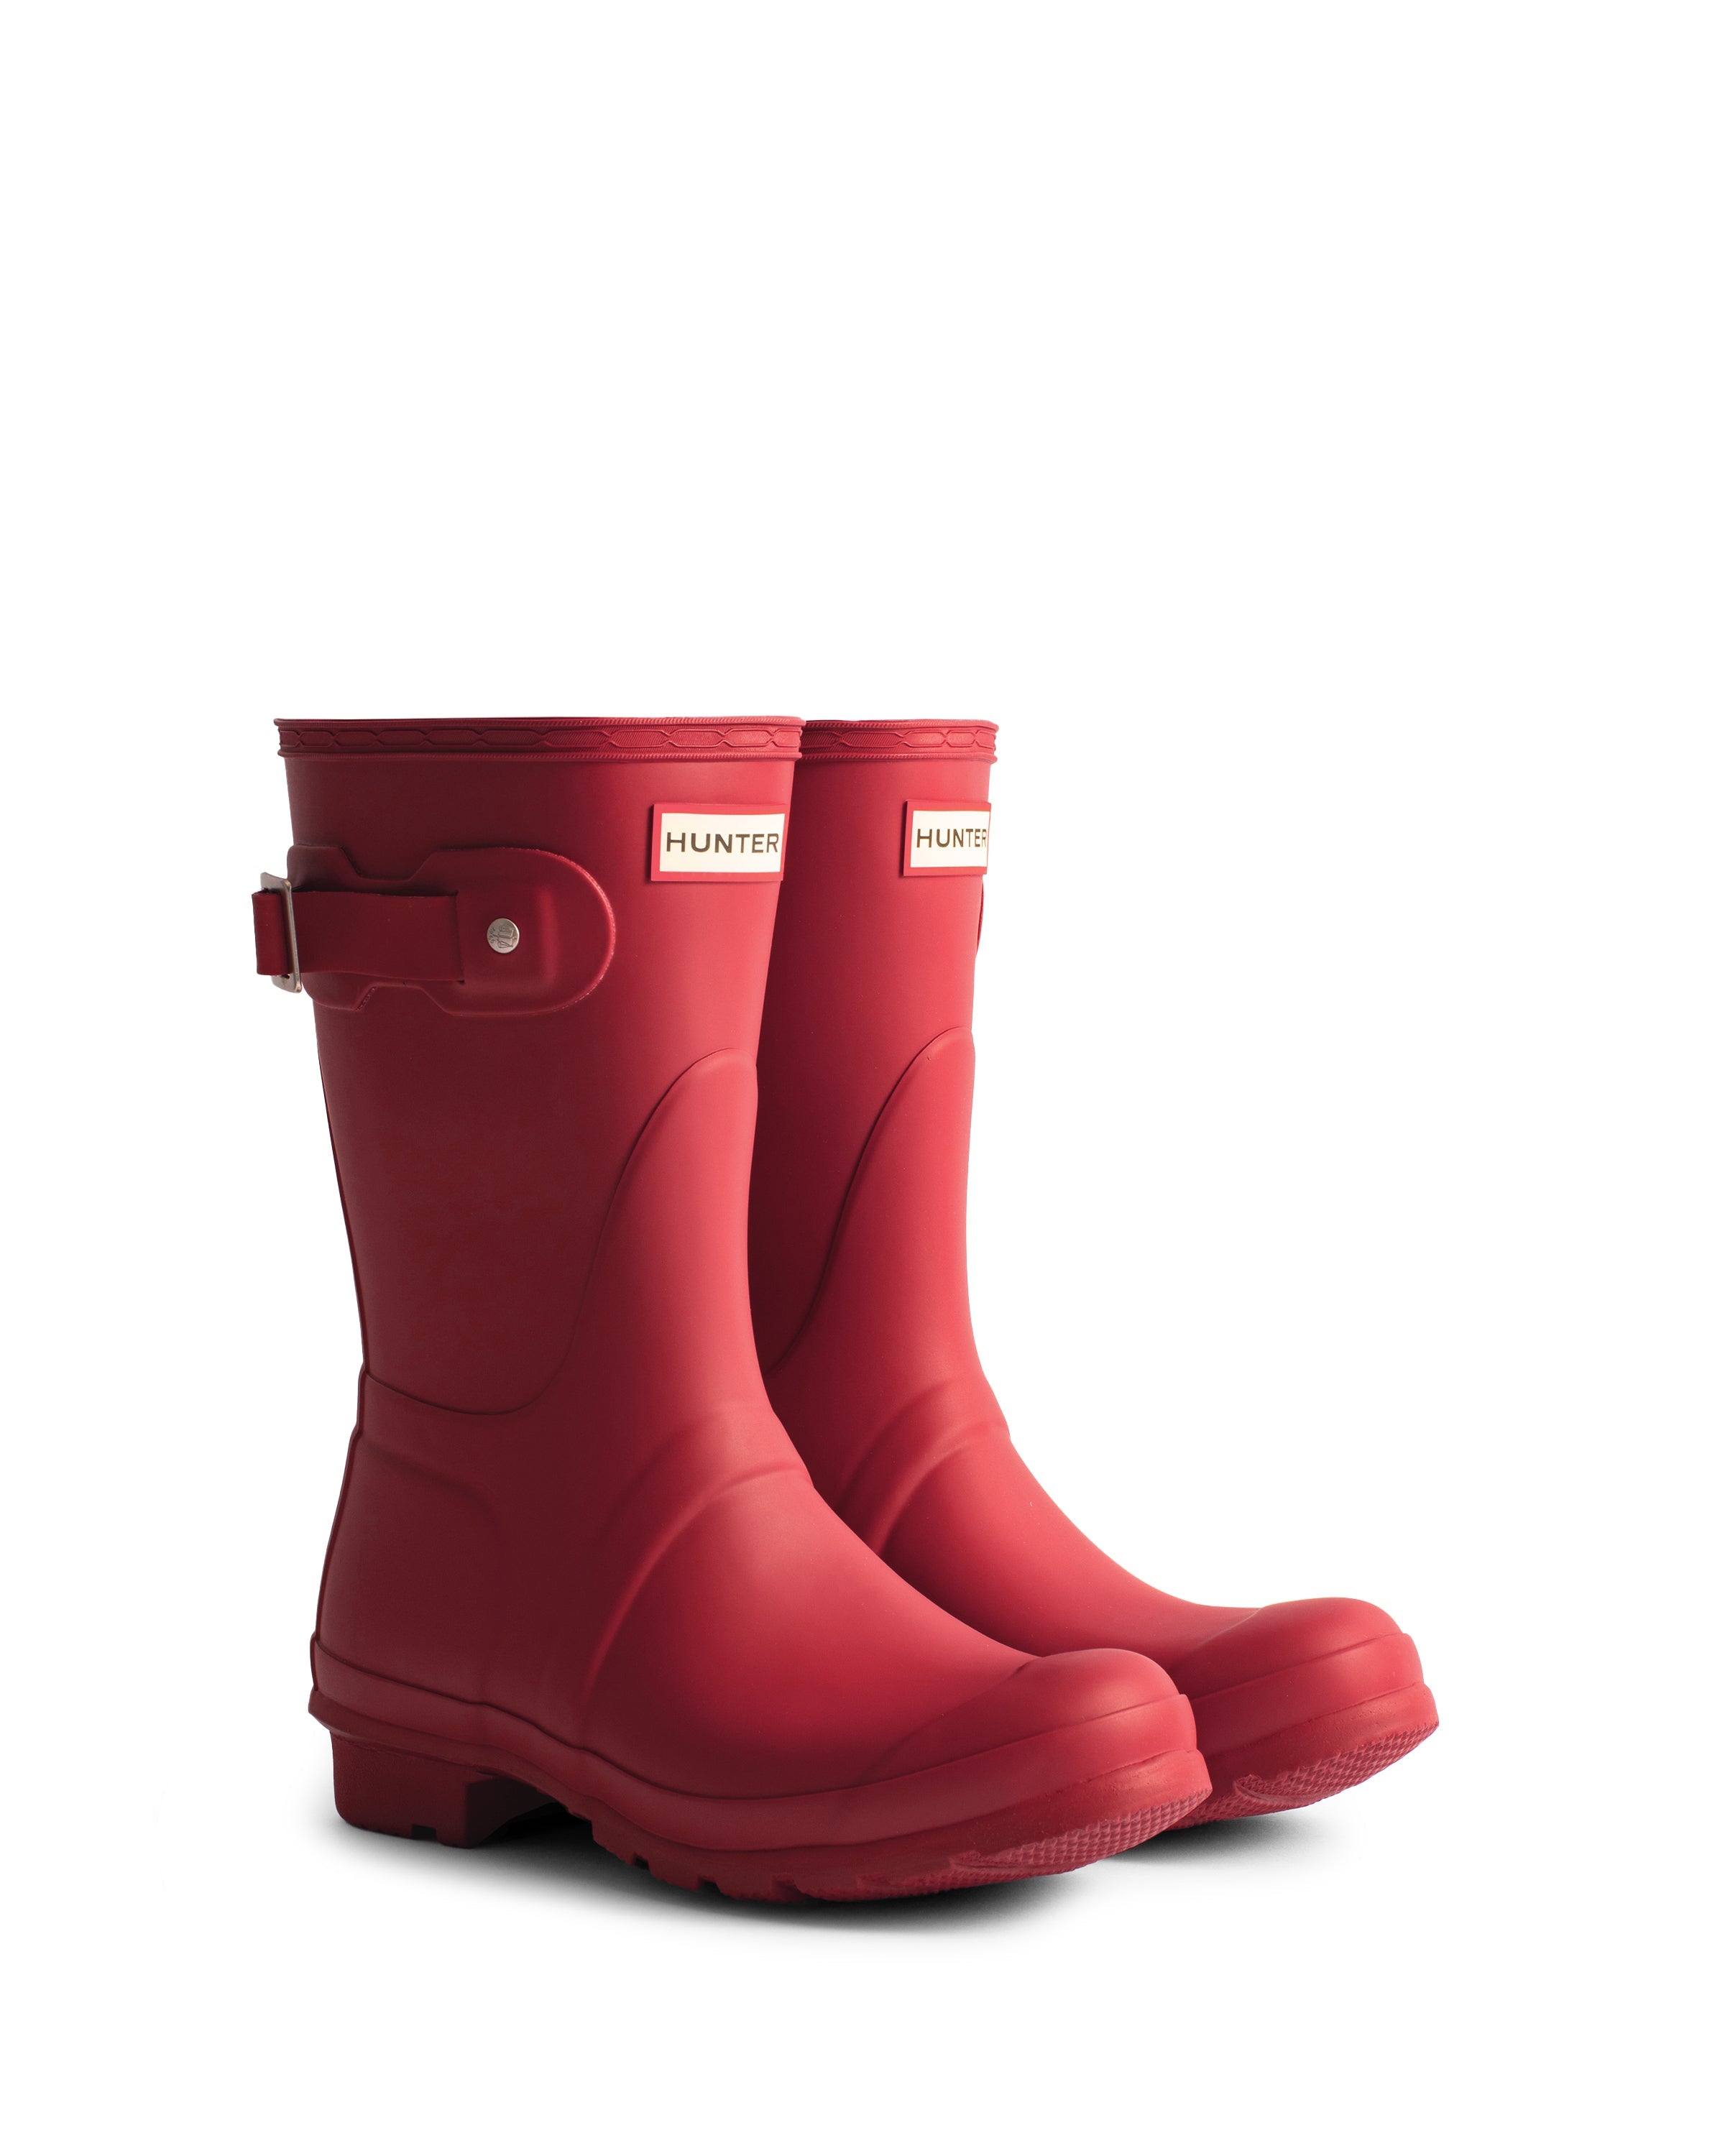 Women's Original Short Rain Boots - Military Red